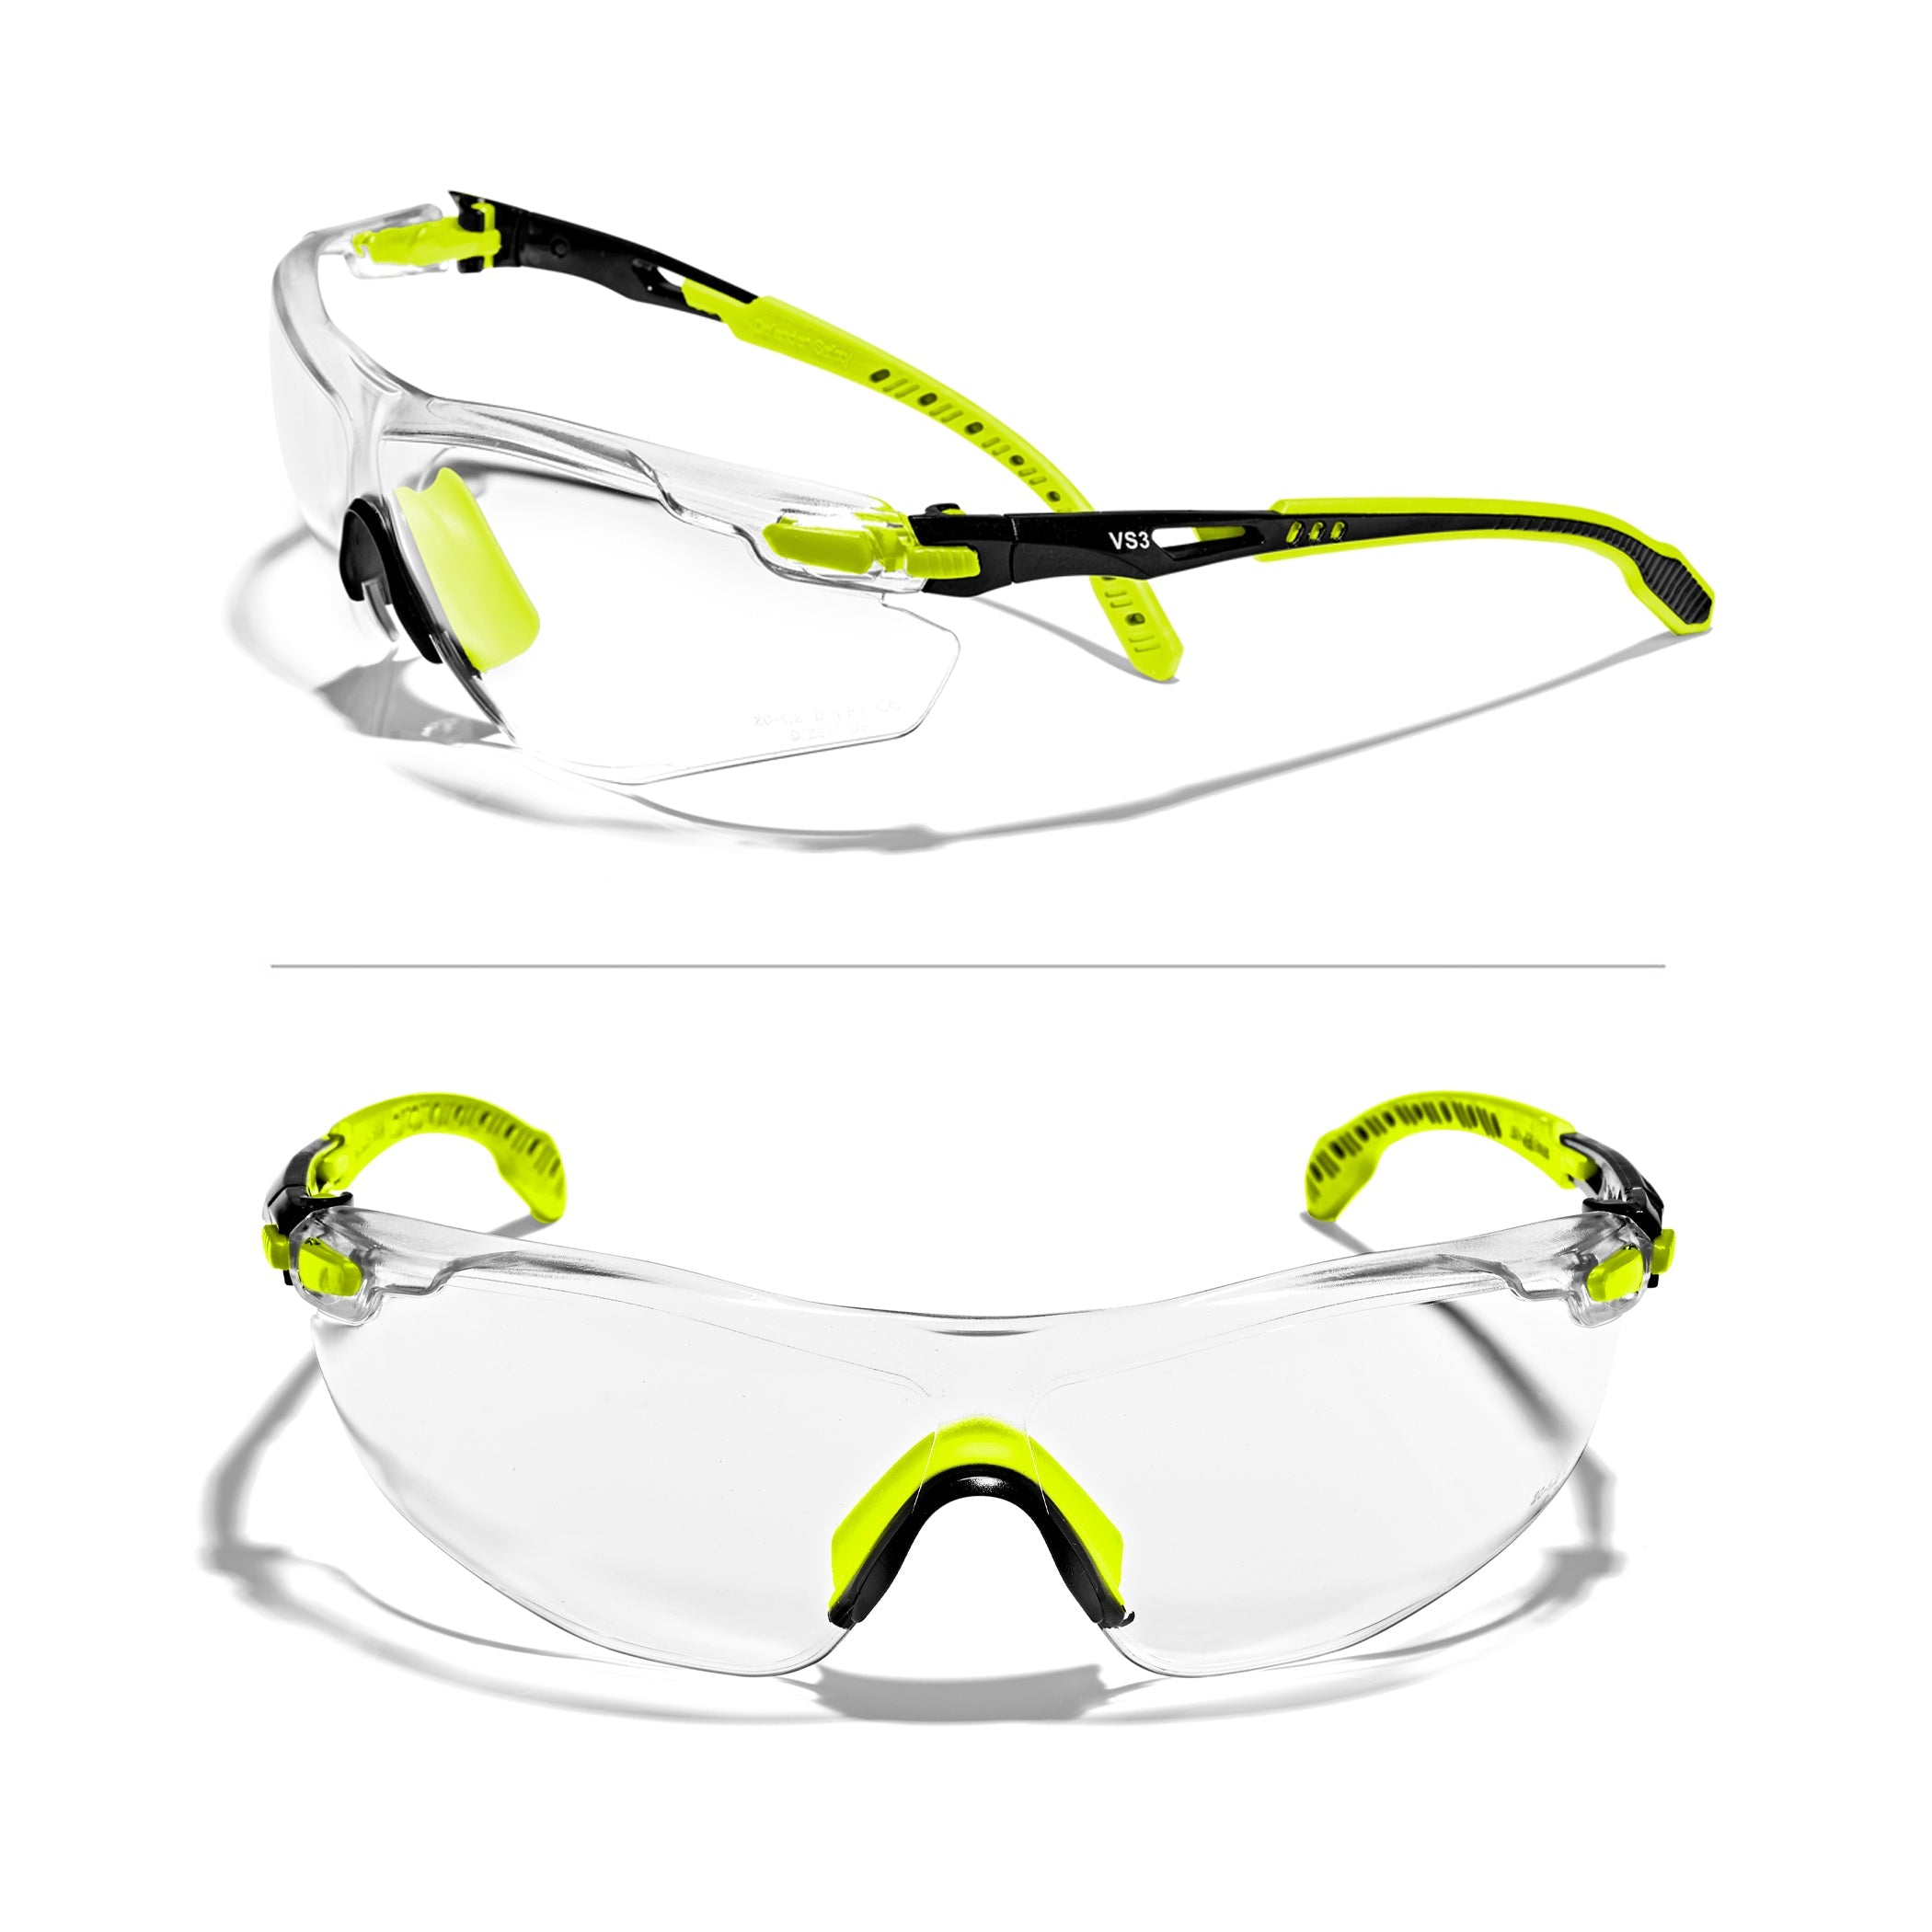 https://cdn.shopify.com/s/files/1/0786/4523/1934/products/optifense-vs3-anti-fog-premium-clear-safety-glasses-ansi-z87-900540.jpg?v=1690825265&width=2100